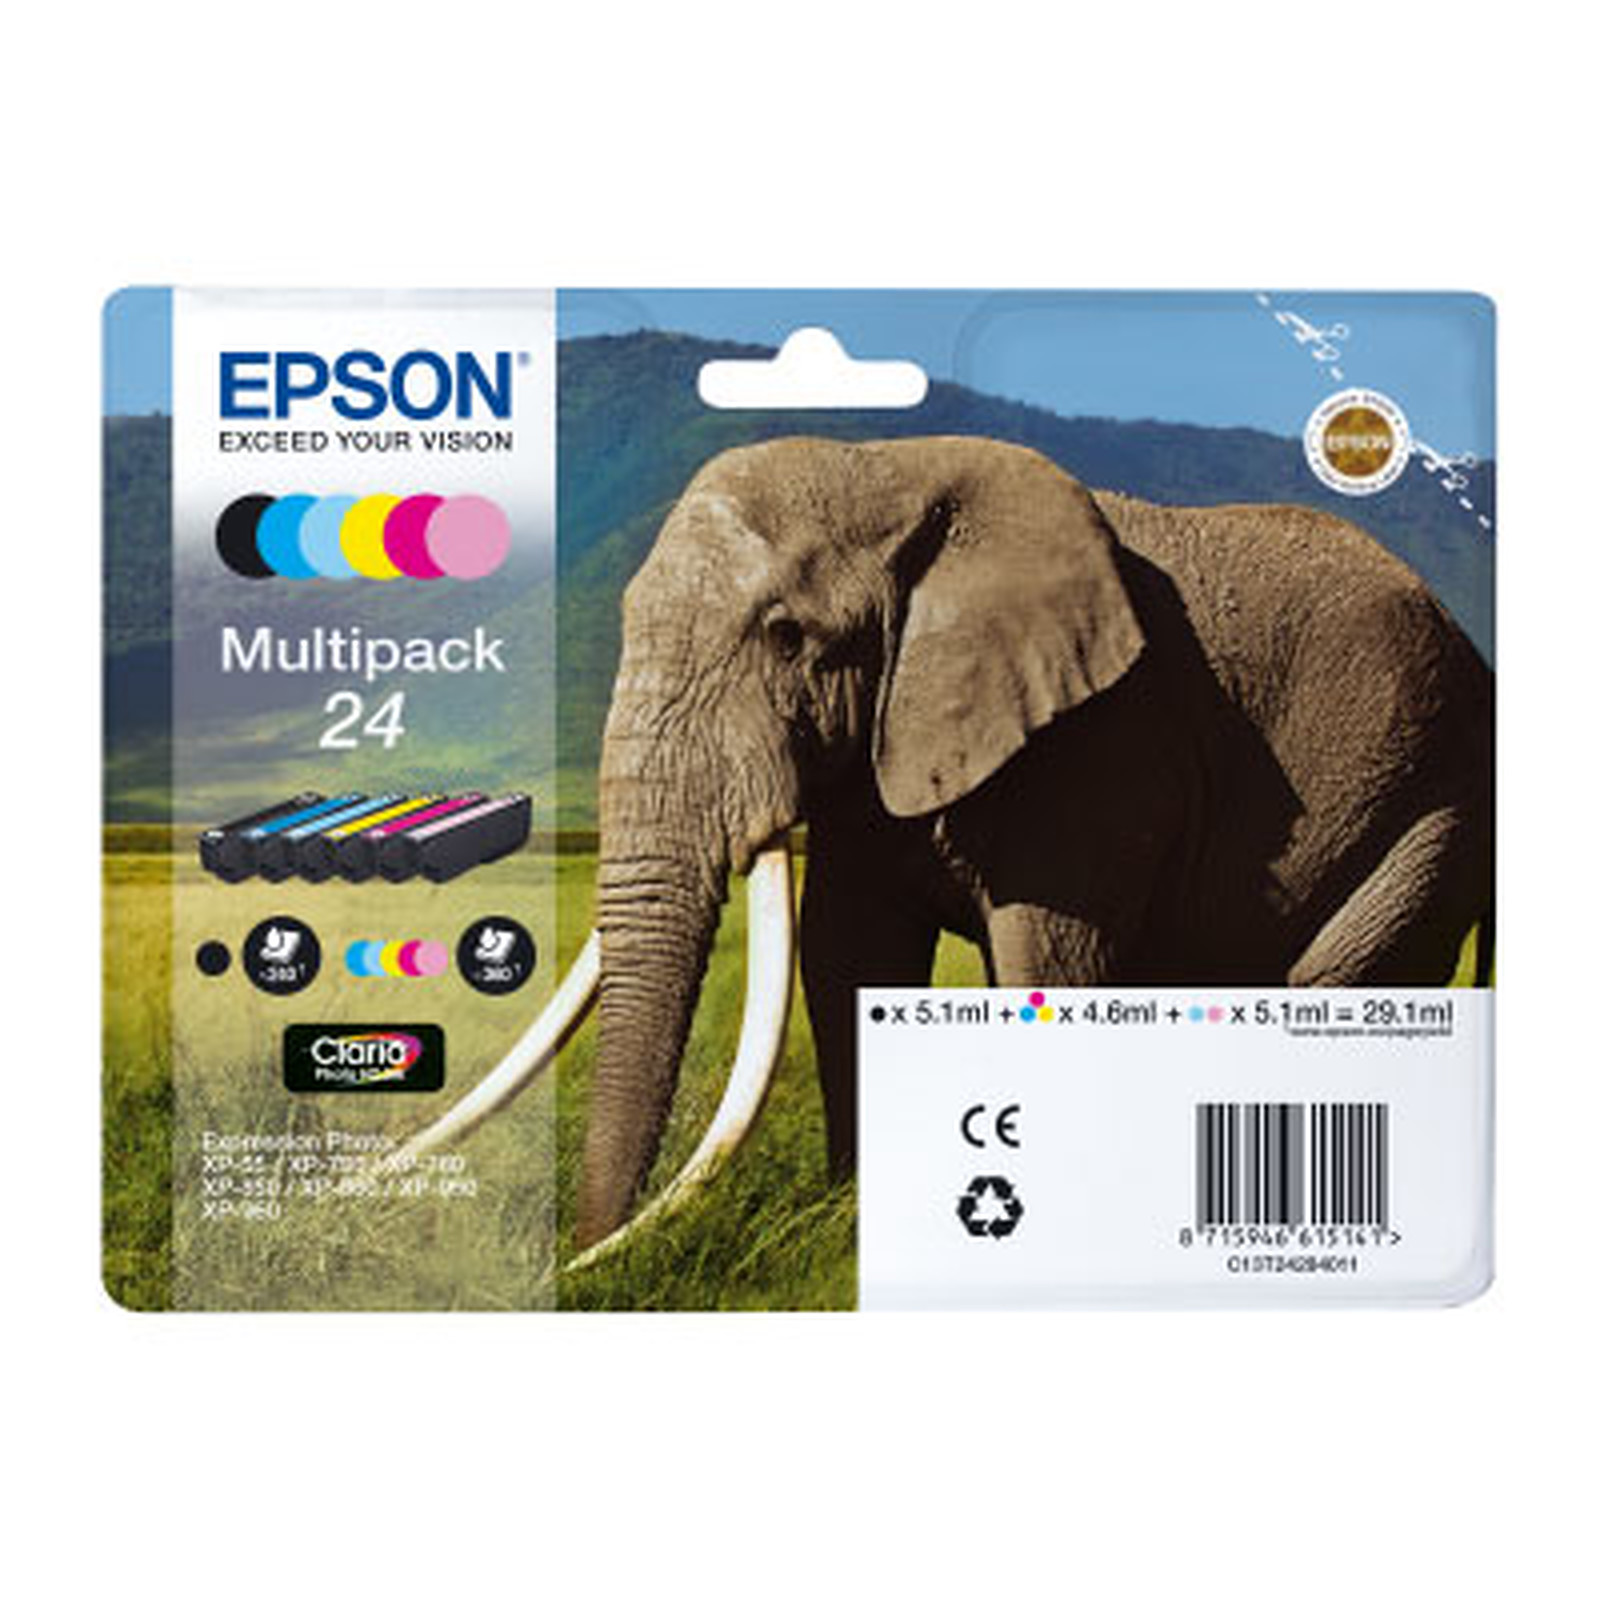 Epson Multipack 24 (C13T24284011) - Cartouche imprimante Epson